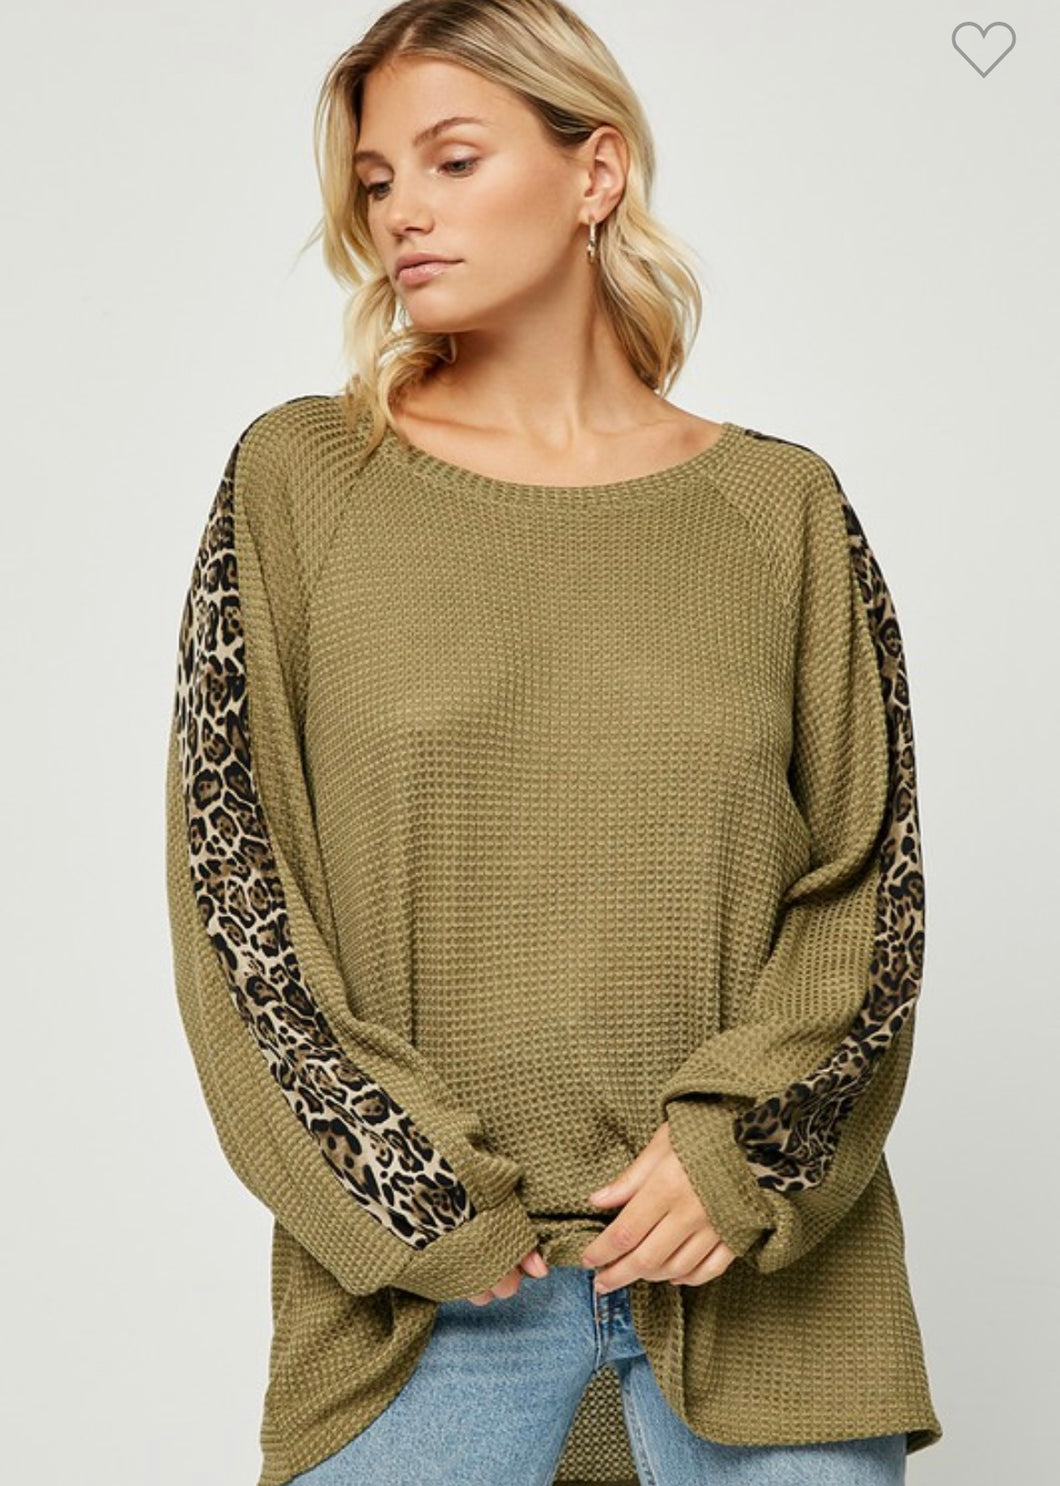 Olive Leopard Knit Top